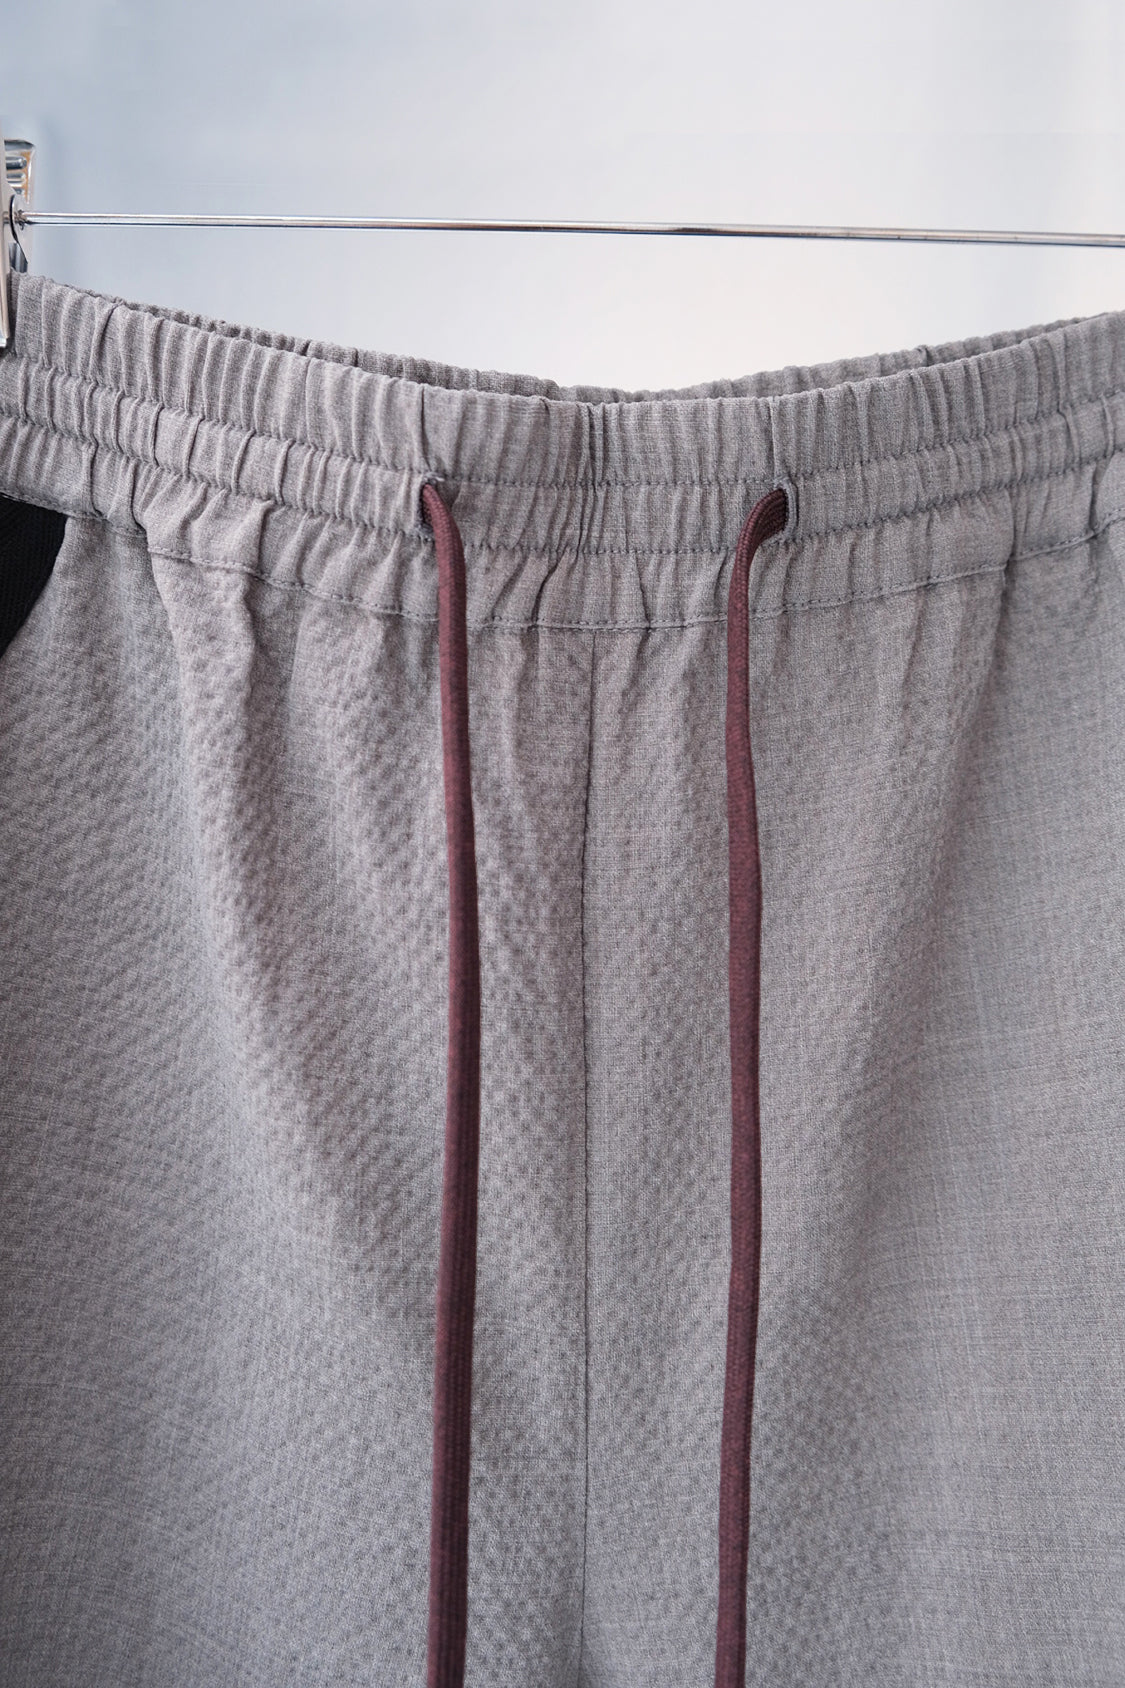 JUN JOGG PANTS / Wool blend textile